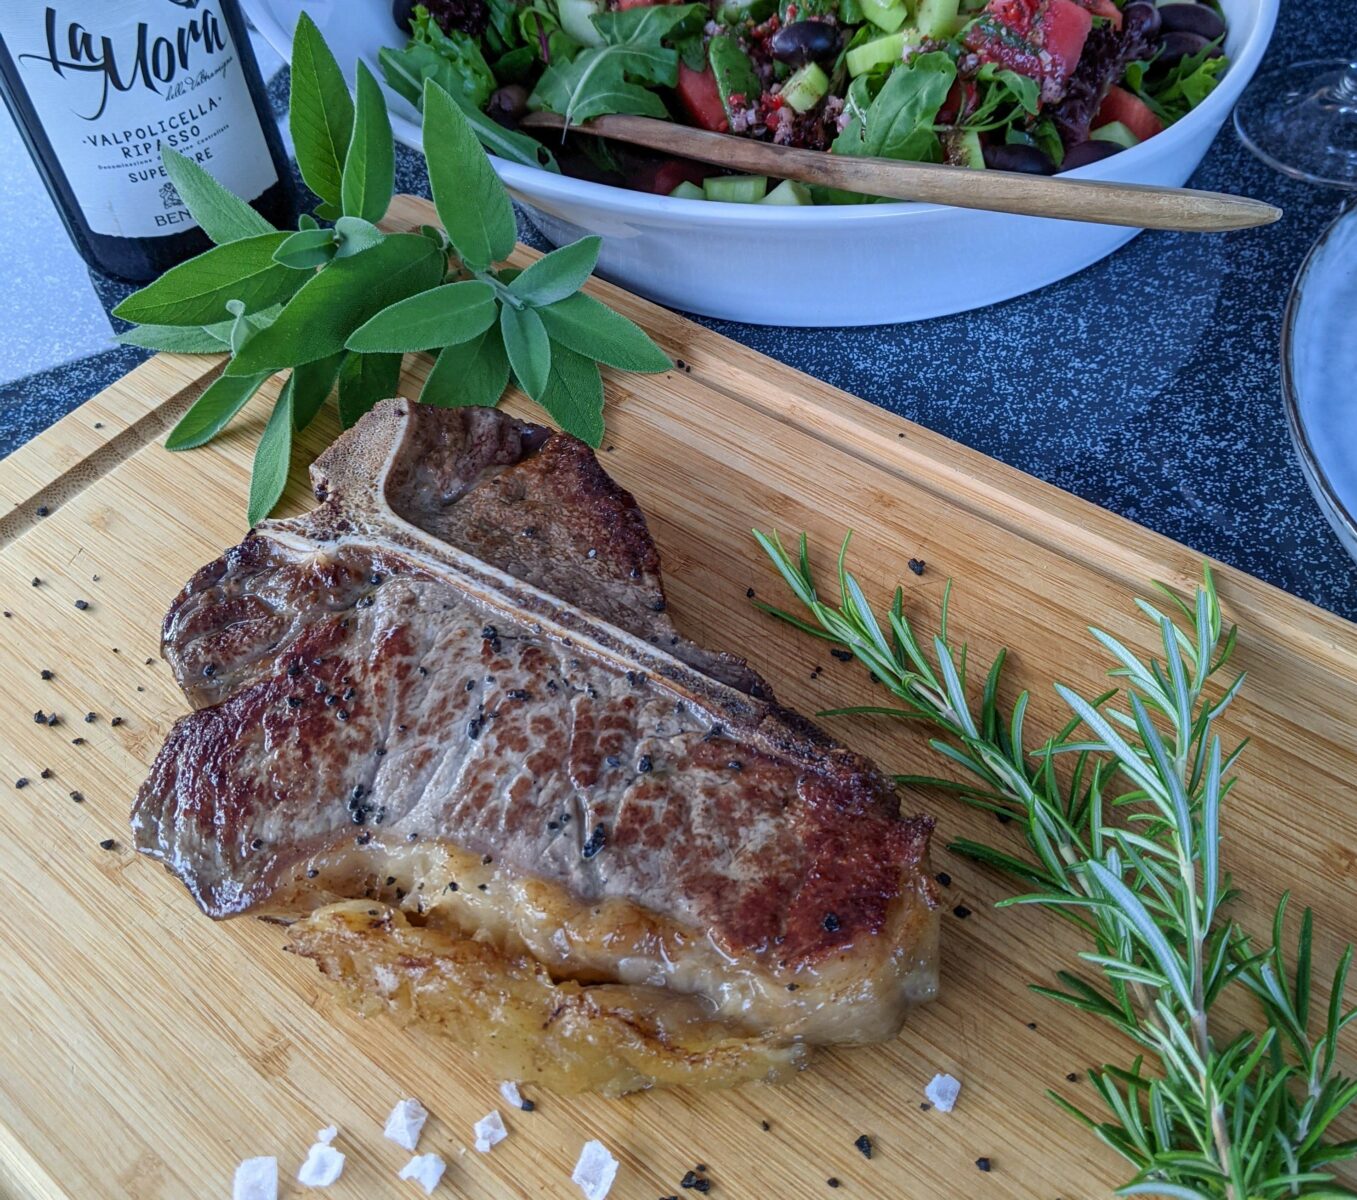 T-bone steak fried in the pan - that's how it works